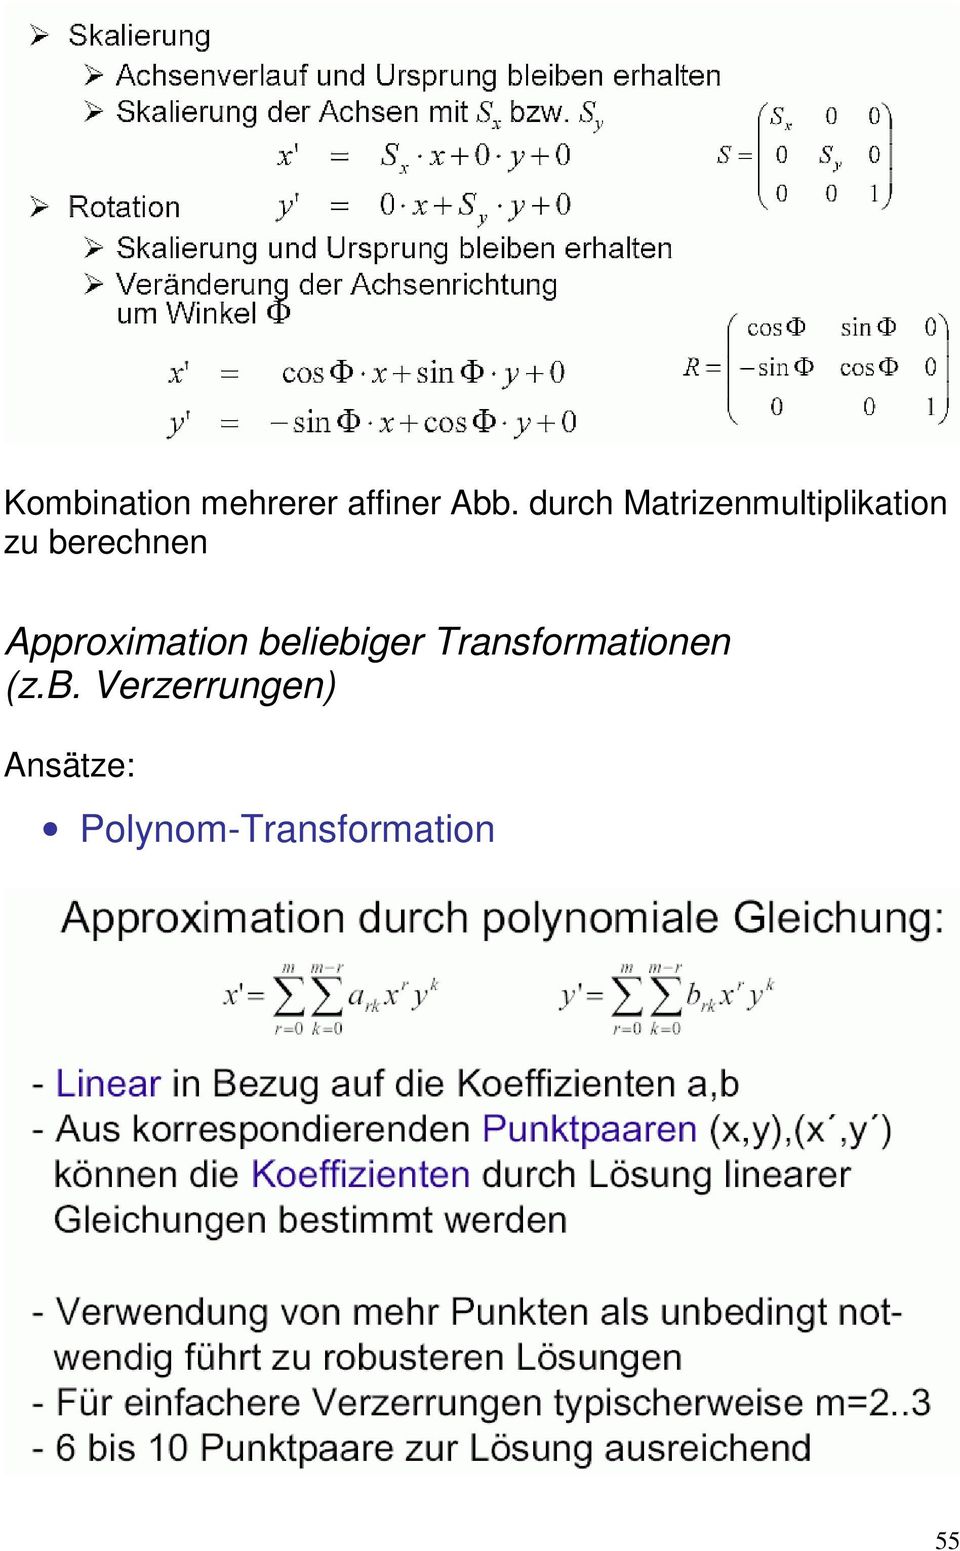 Approximation beliebiger Transformationen